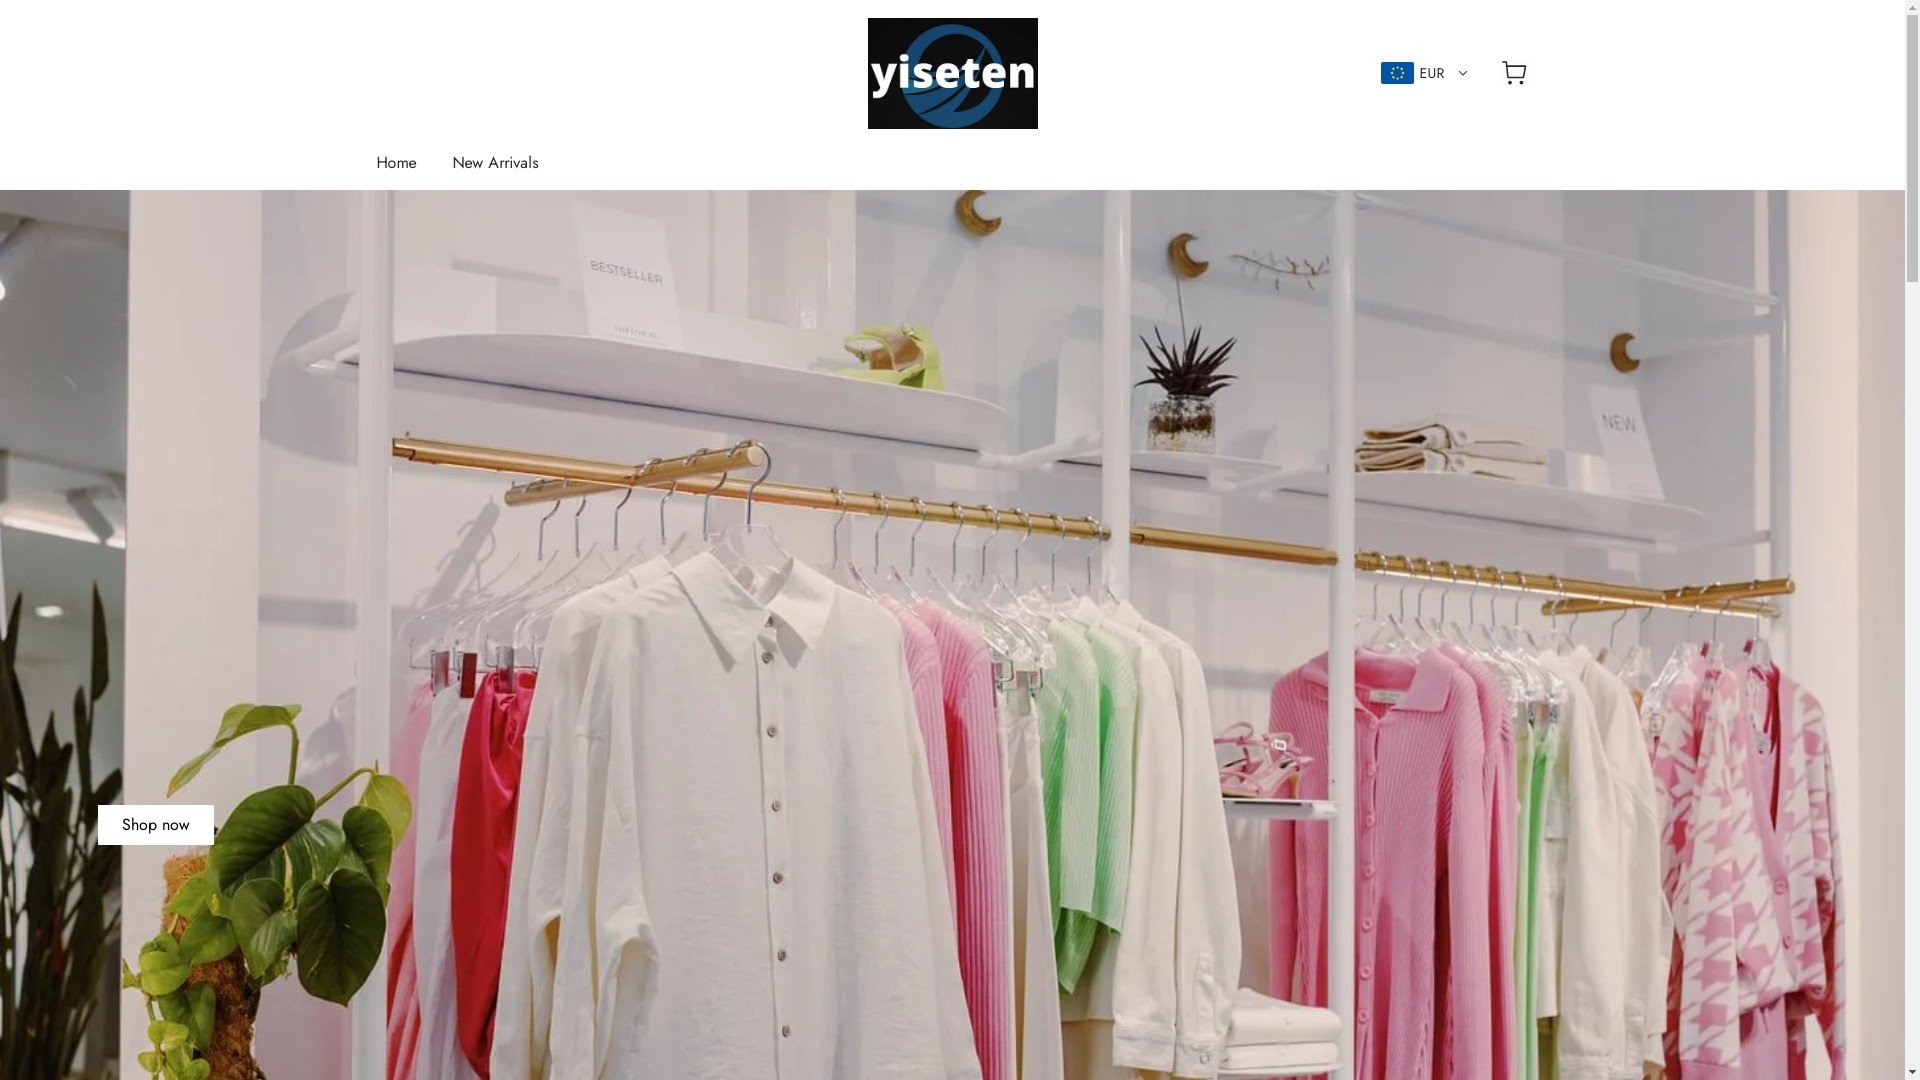 Yiseten located at yiseten.com